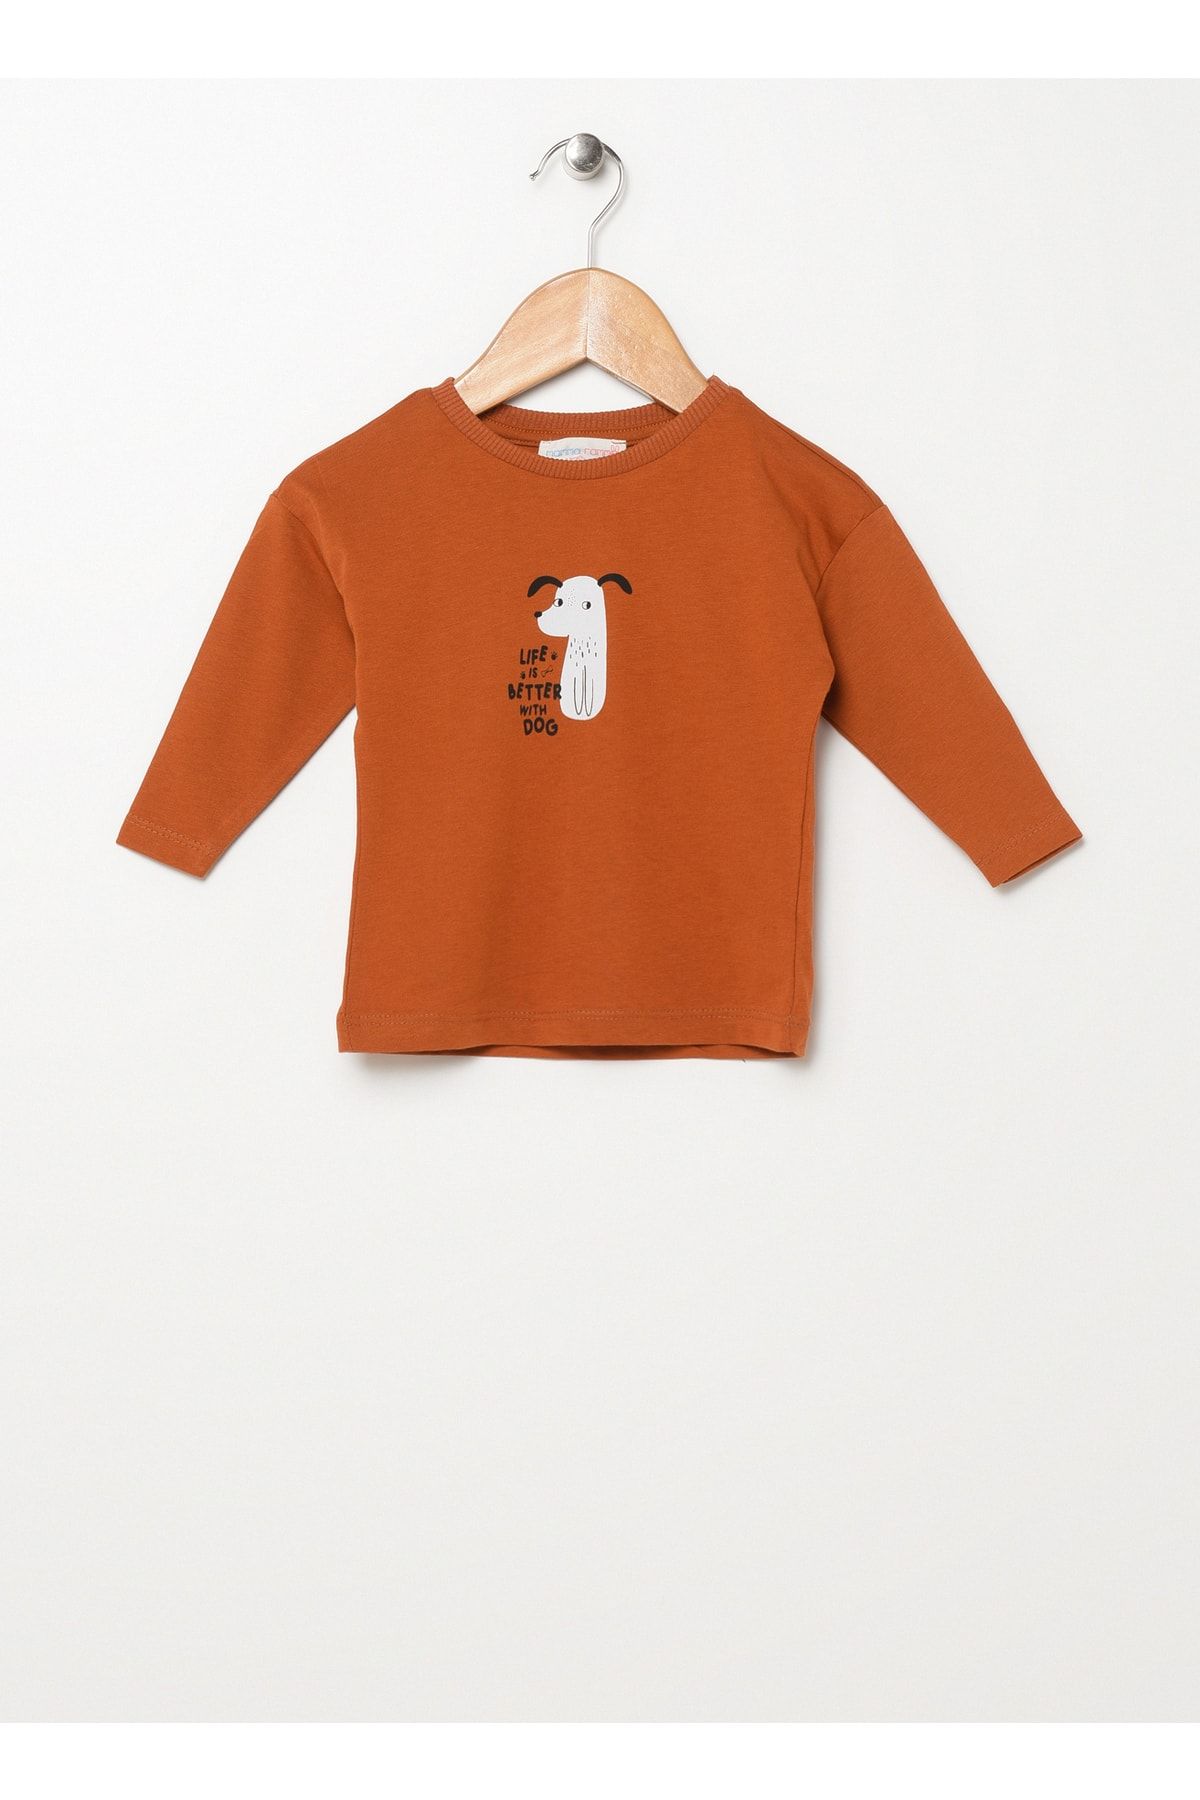 Mammaramma Baskılı Tarçın Bebek T-shirt 22fwb-21